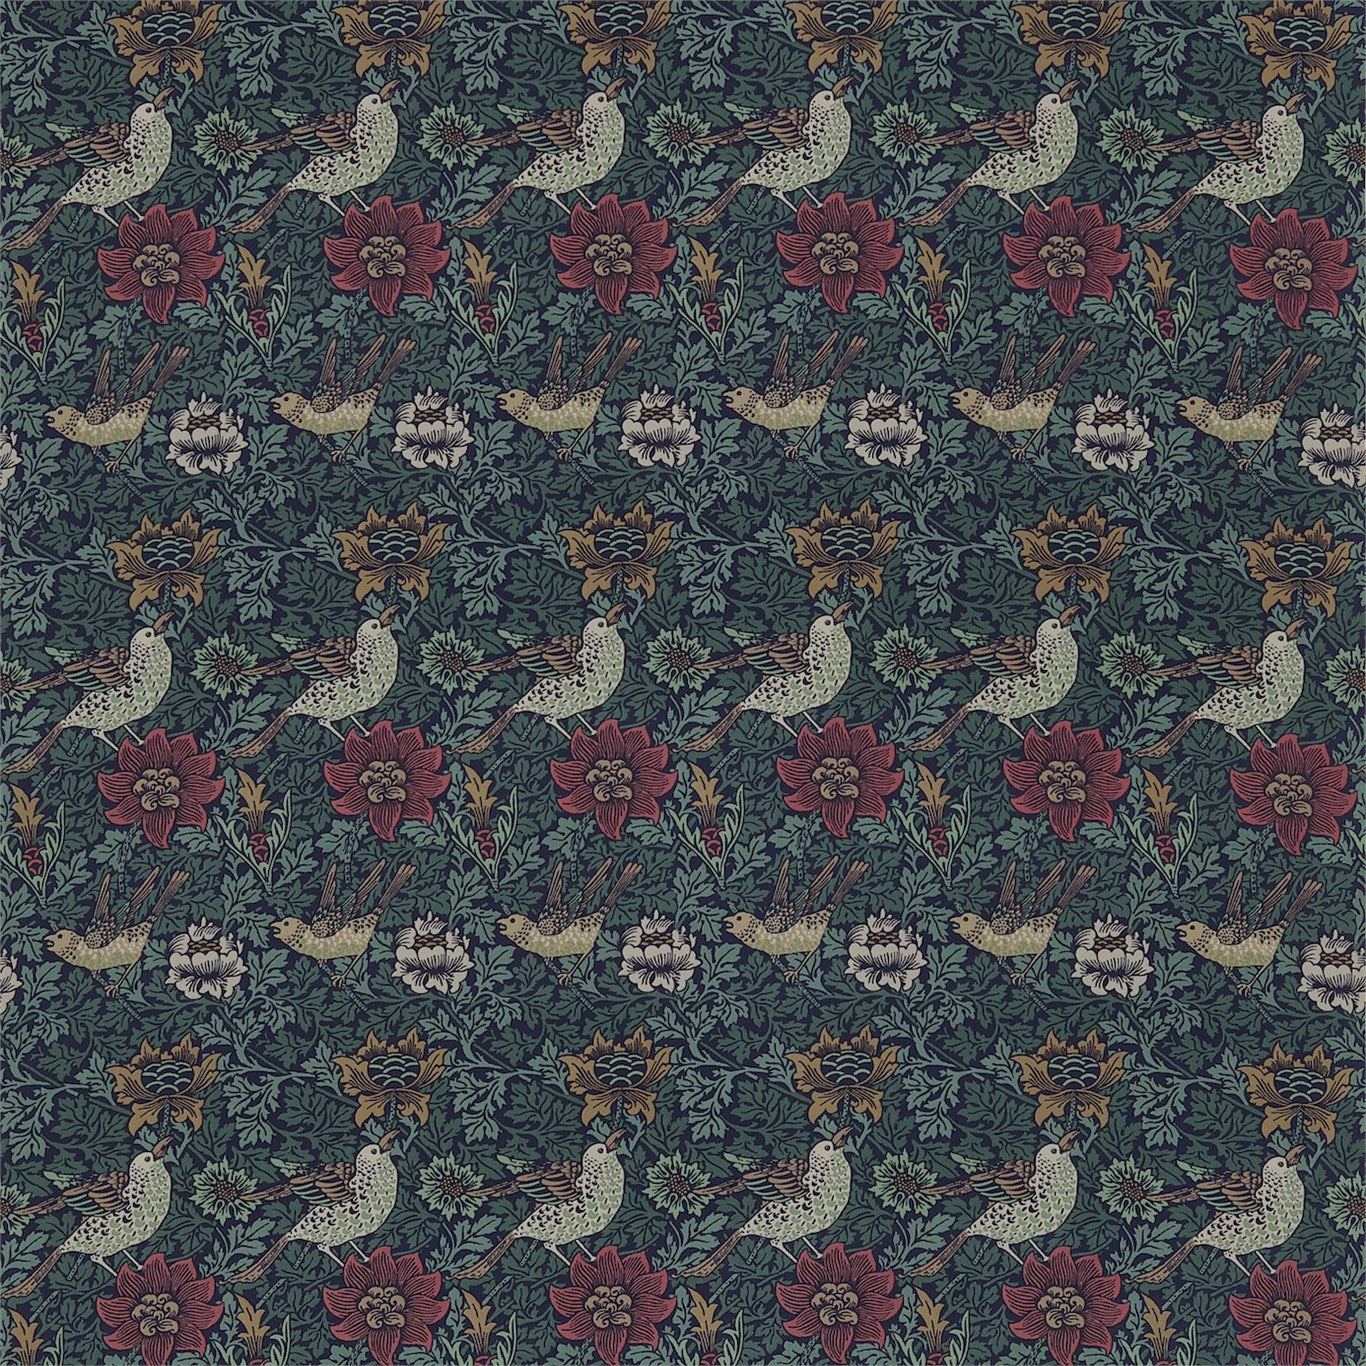 Bird & Anemone Fabric by Morris & Co. - DMFPBI201 - Forest/Indigo